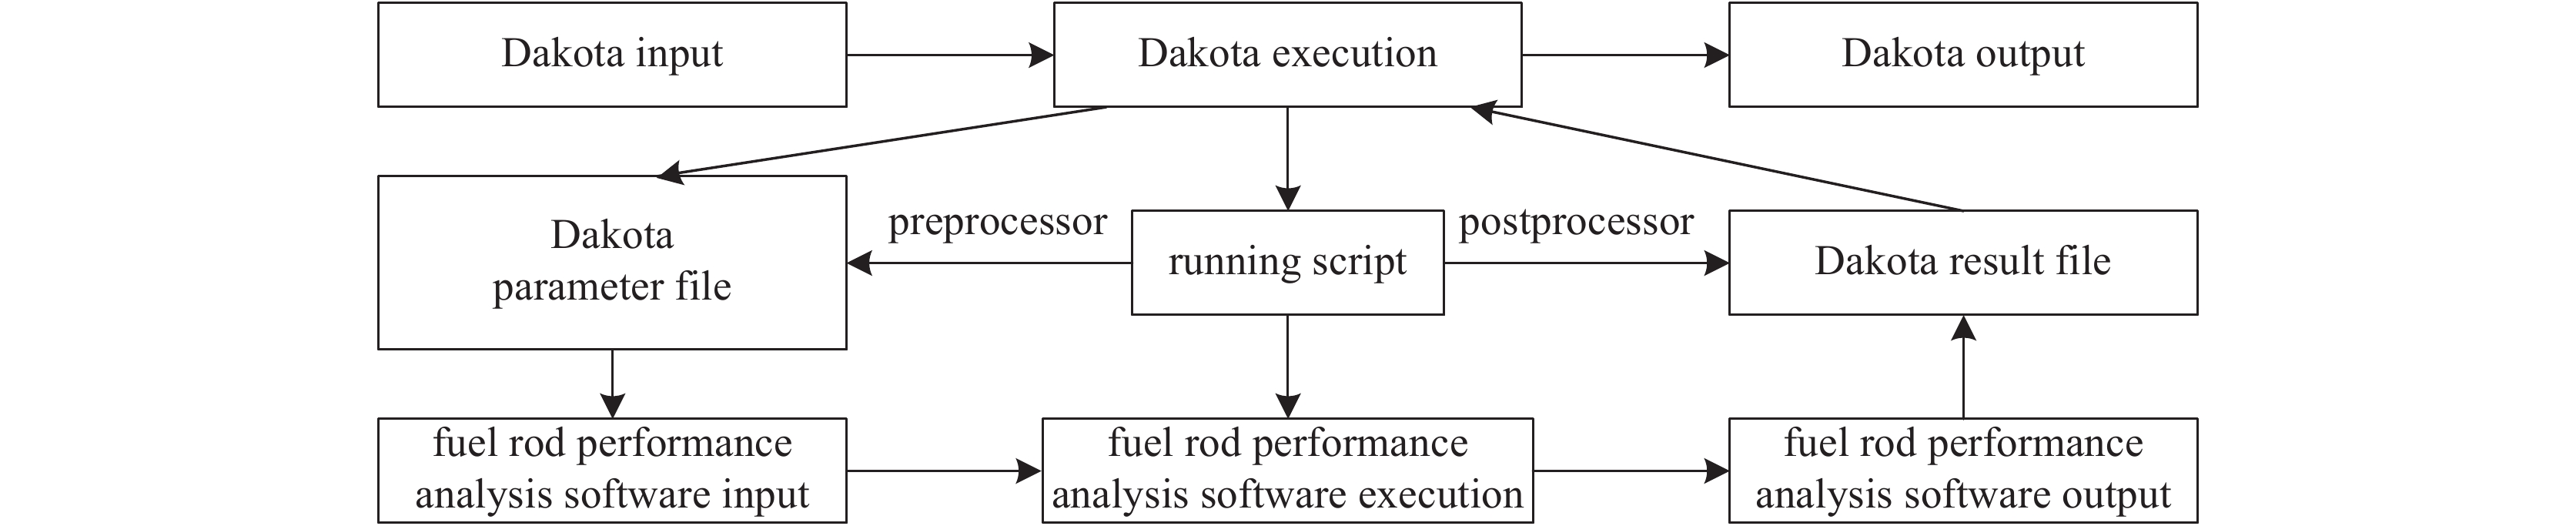 Coupling relationship between Dakota and fuel rod performance analysis software